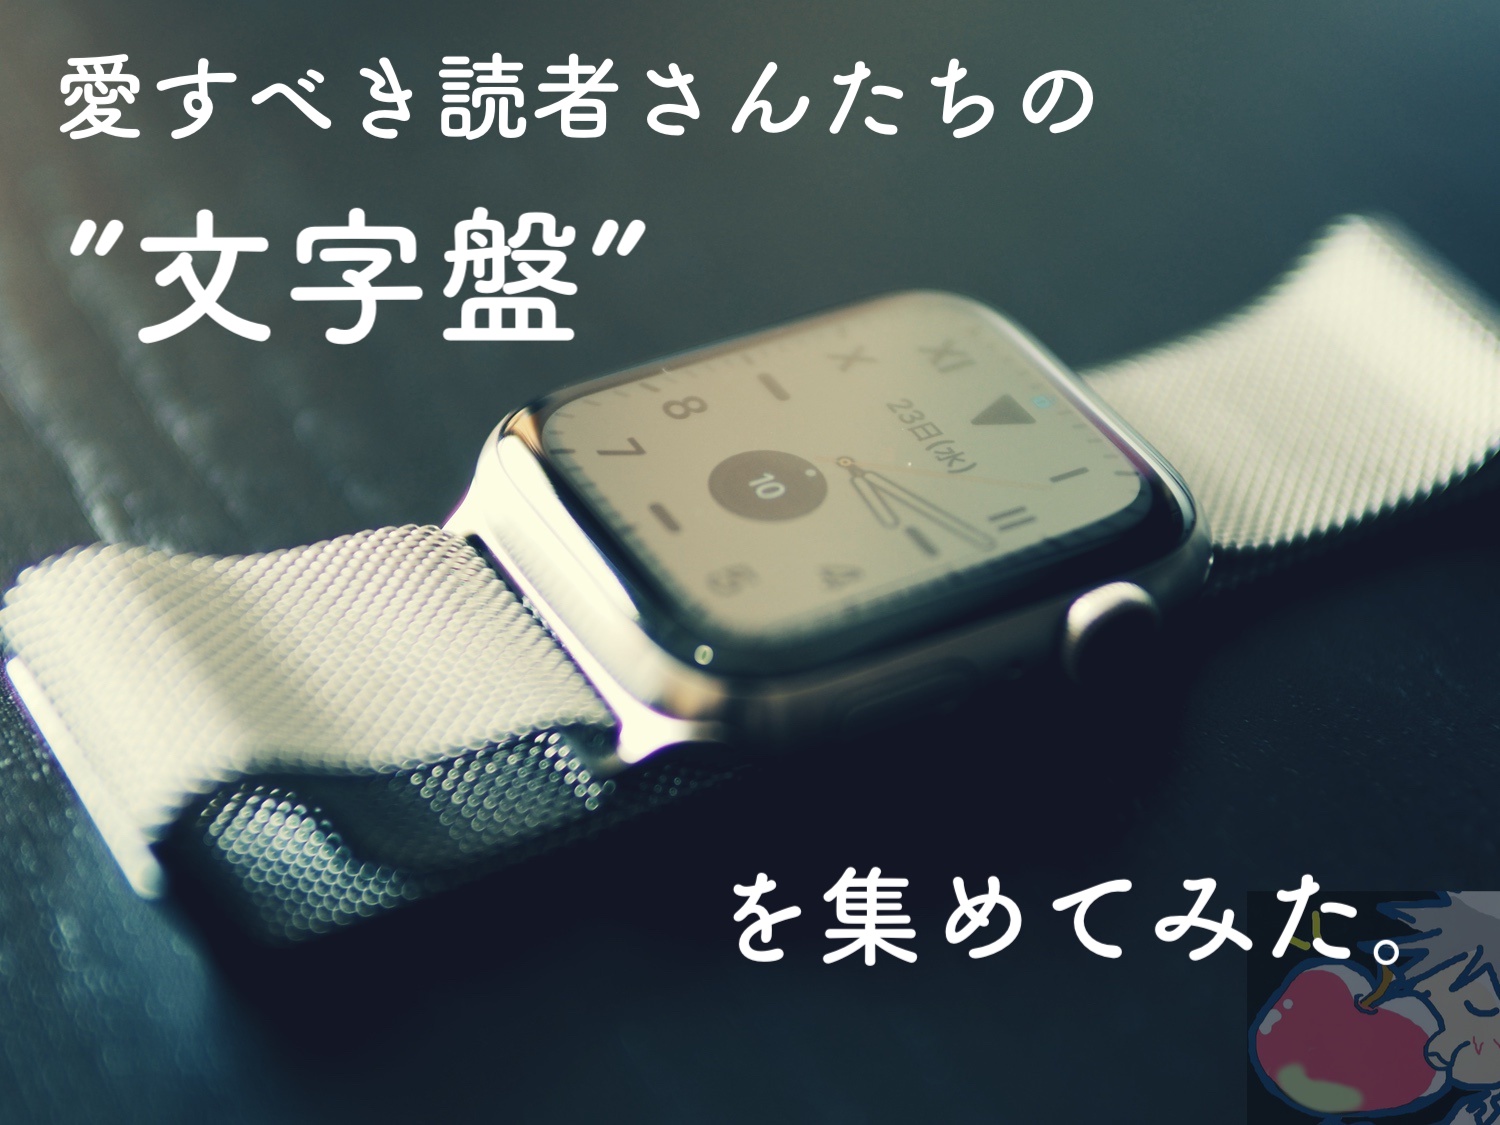 Apple Watch SE シルバー 見本品並の綺麗さ - agame.ag